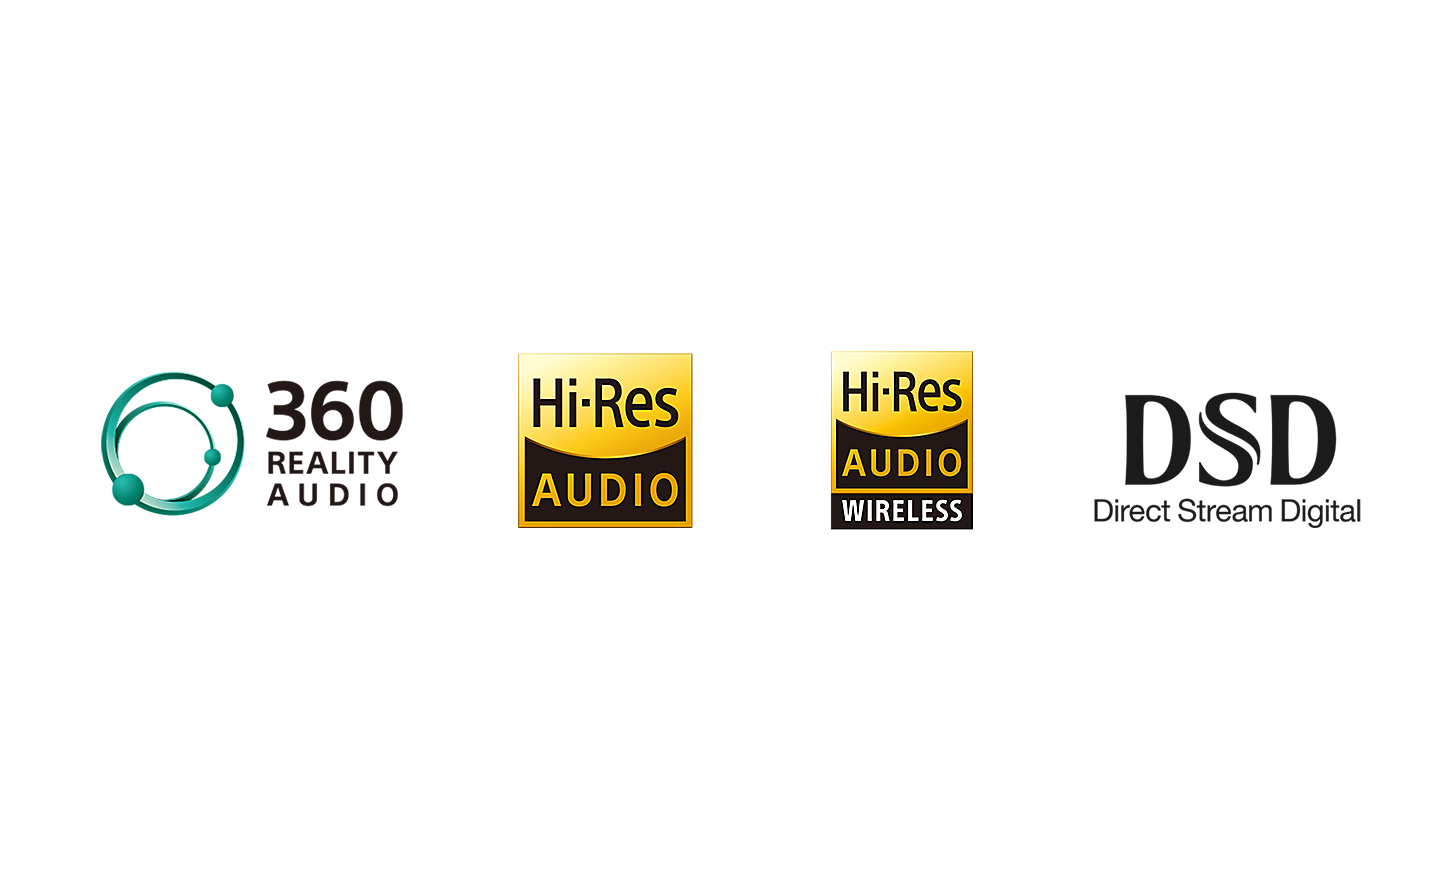 Logotip 360 Reality Audio, logotip Hi-Res Audio, logotip Hi-Res Audio Wireless, logotip DSD (Direct Stream Digital)